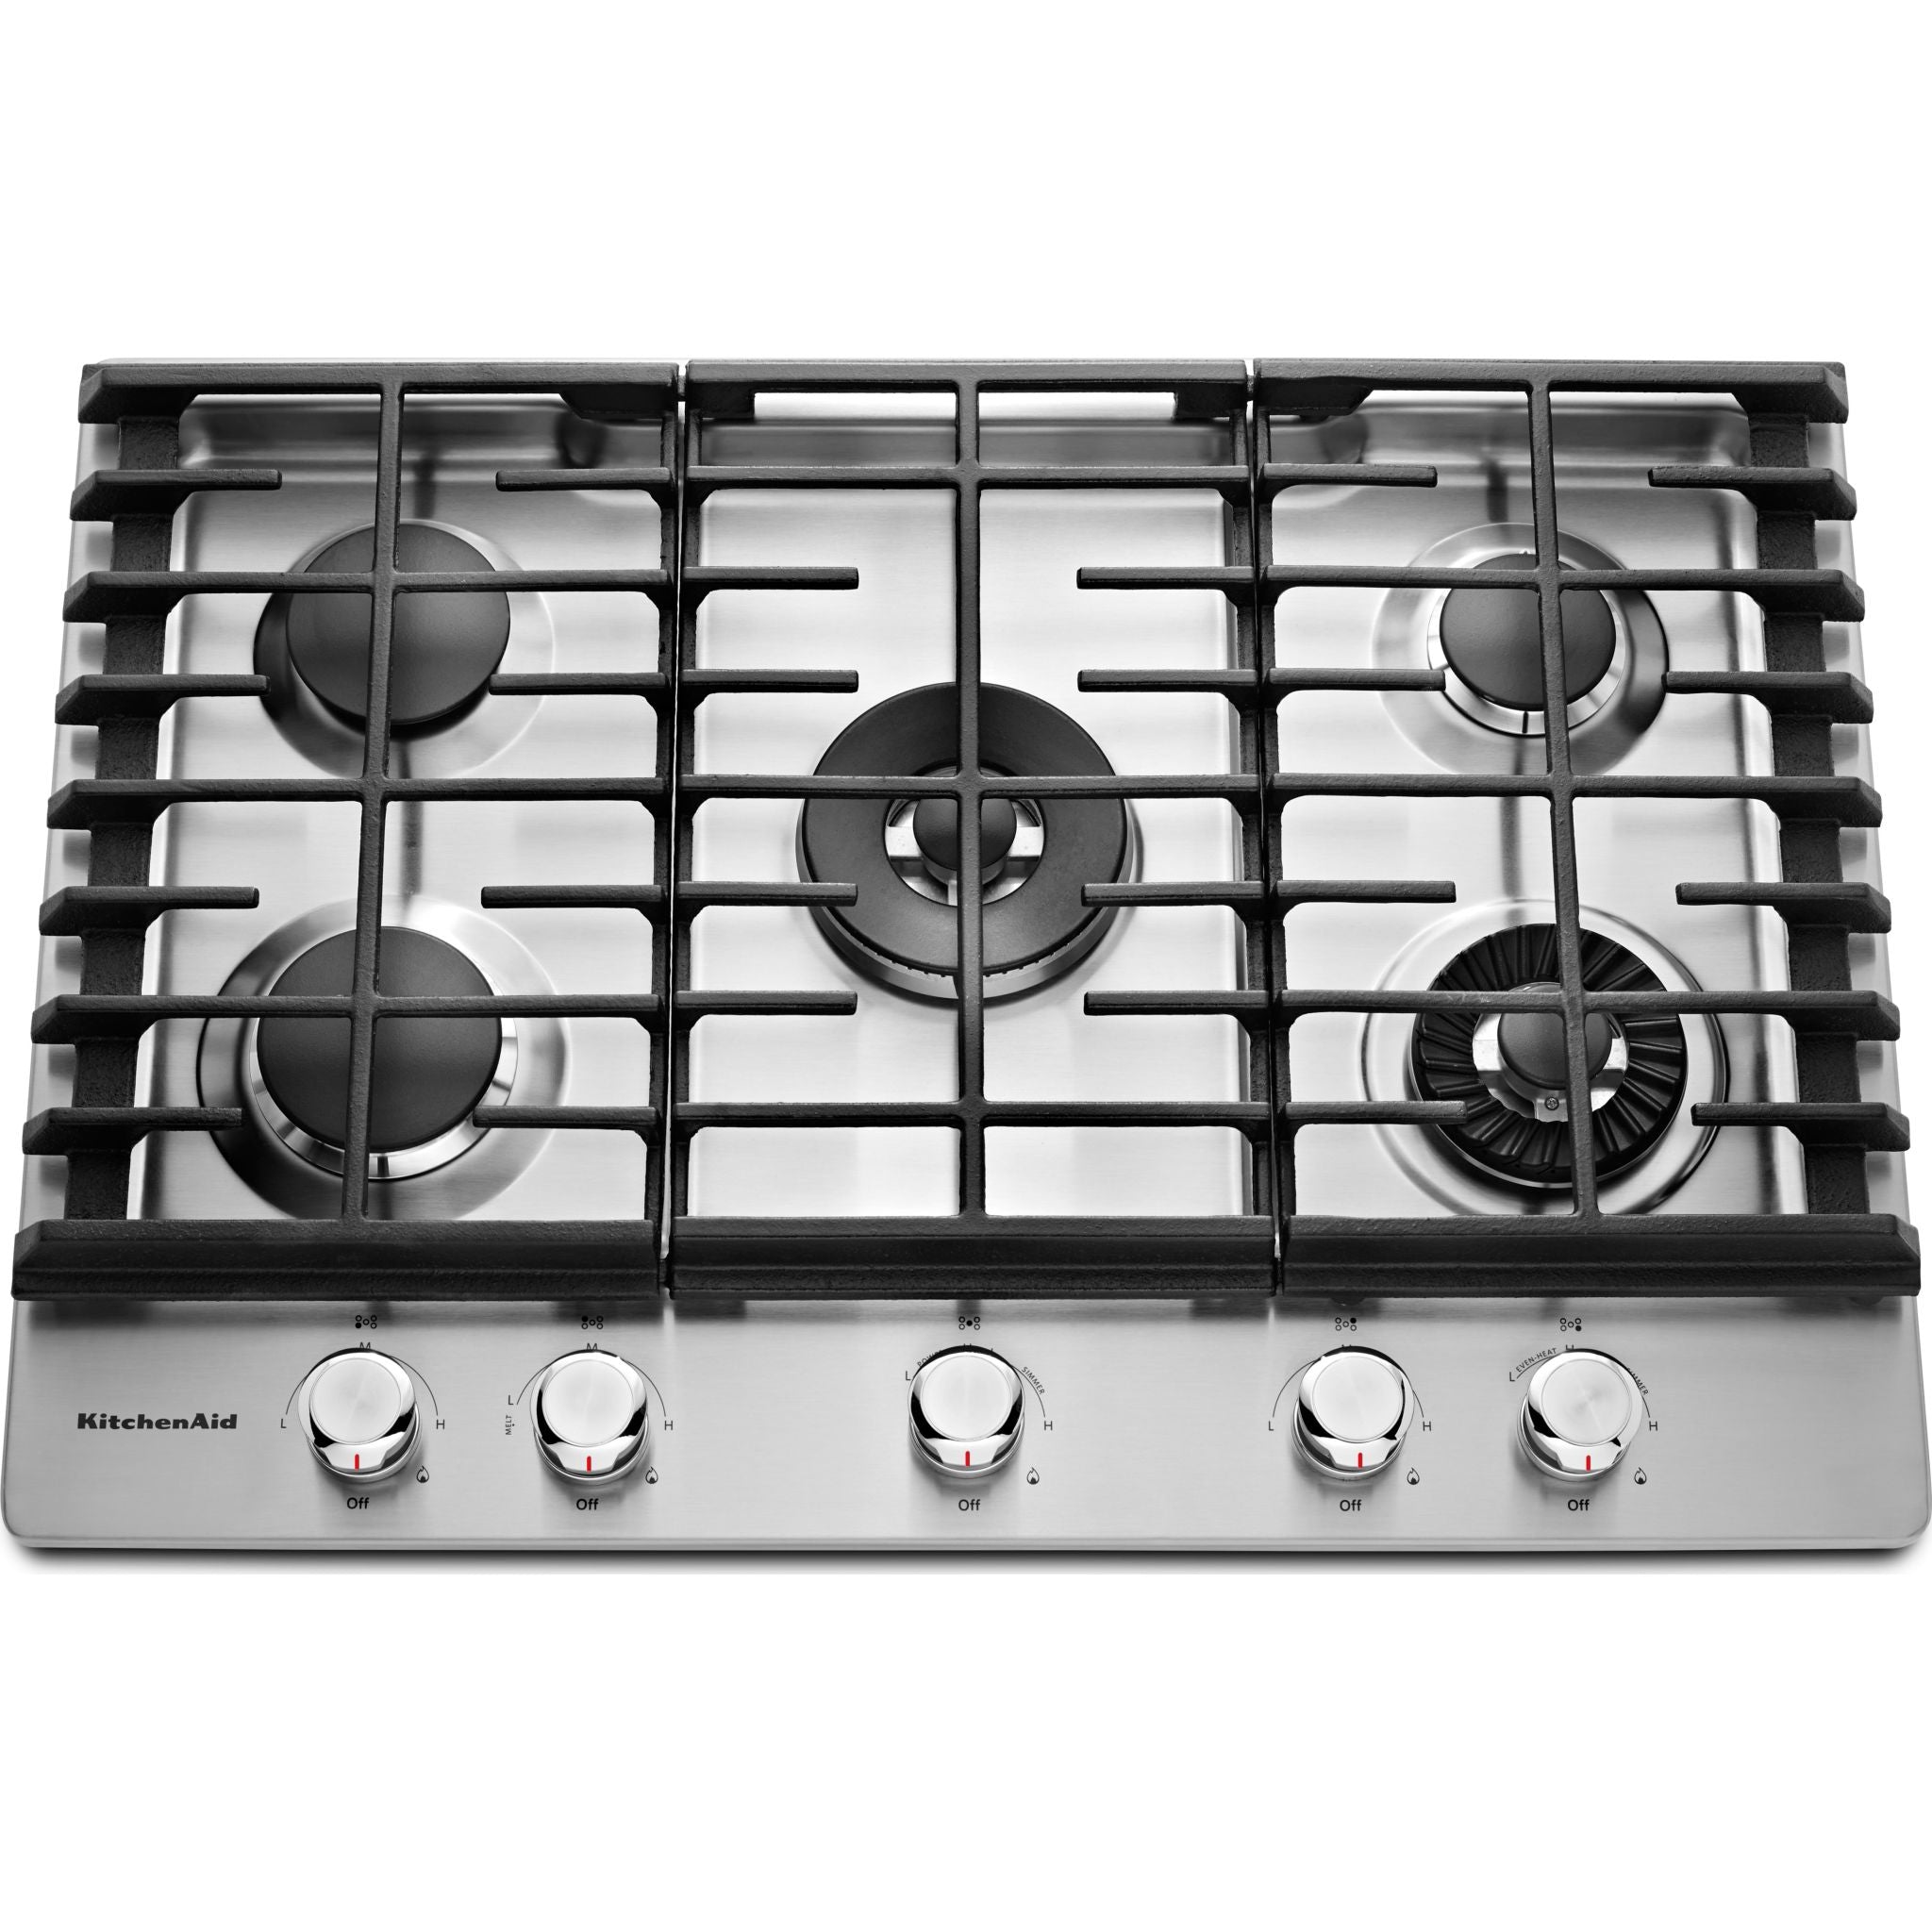 KitchenAid, KitchenAid 30" Gas Cooktop (KCGS950ESS) - Stainless Steel